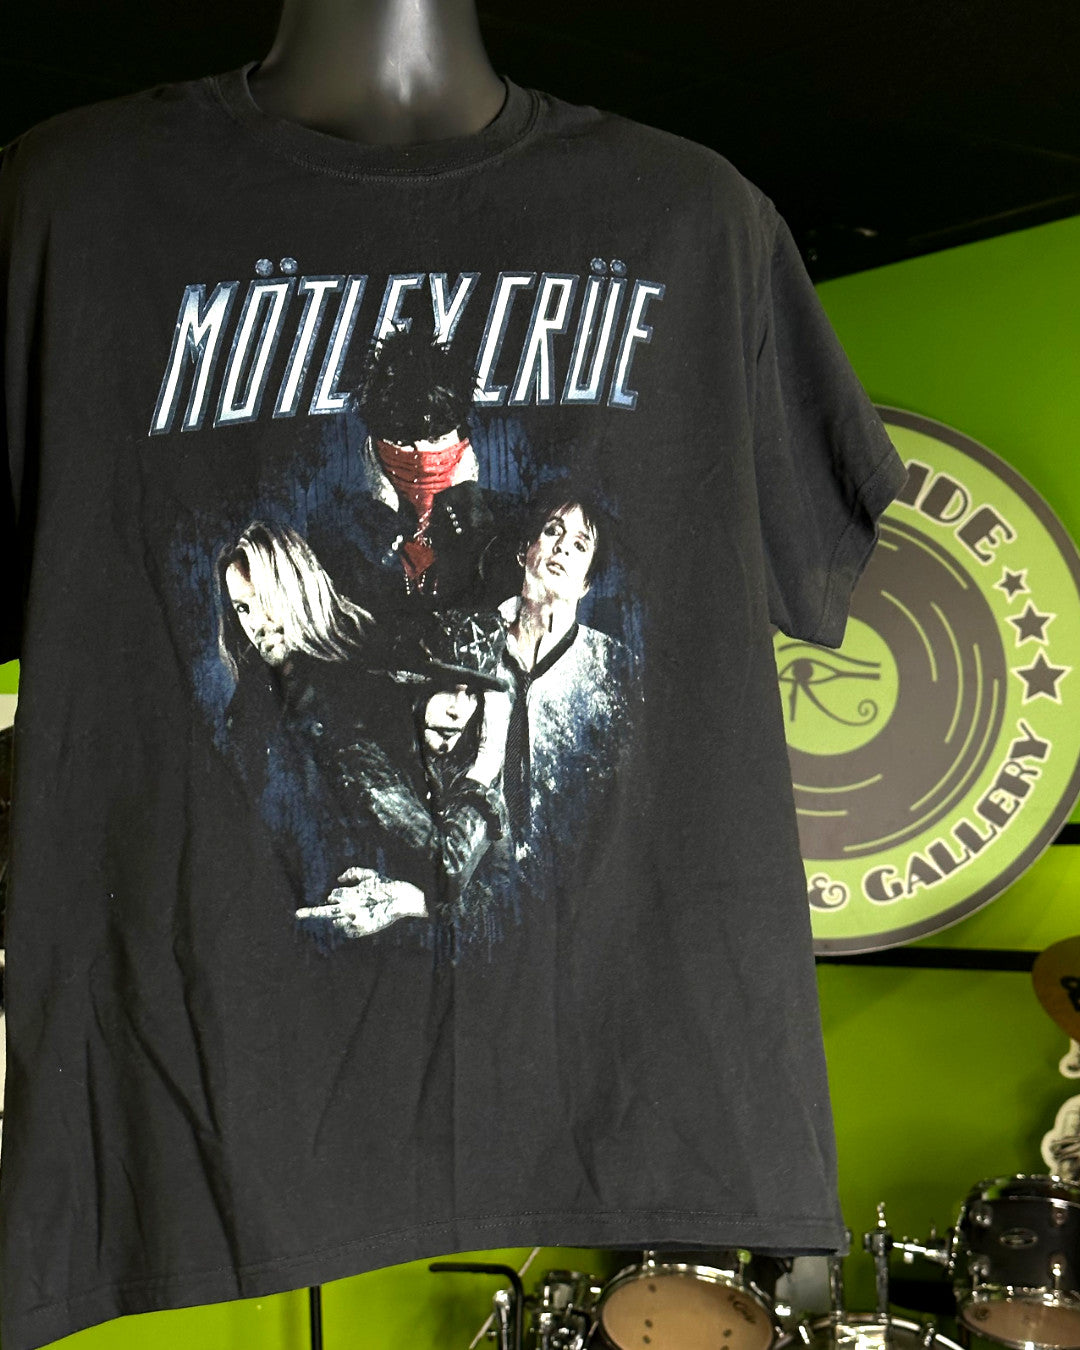 Motley Crue 2012 The Tour Sitting Group Shot T-Shirt, Blk, XL - Darkside Records